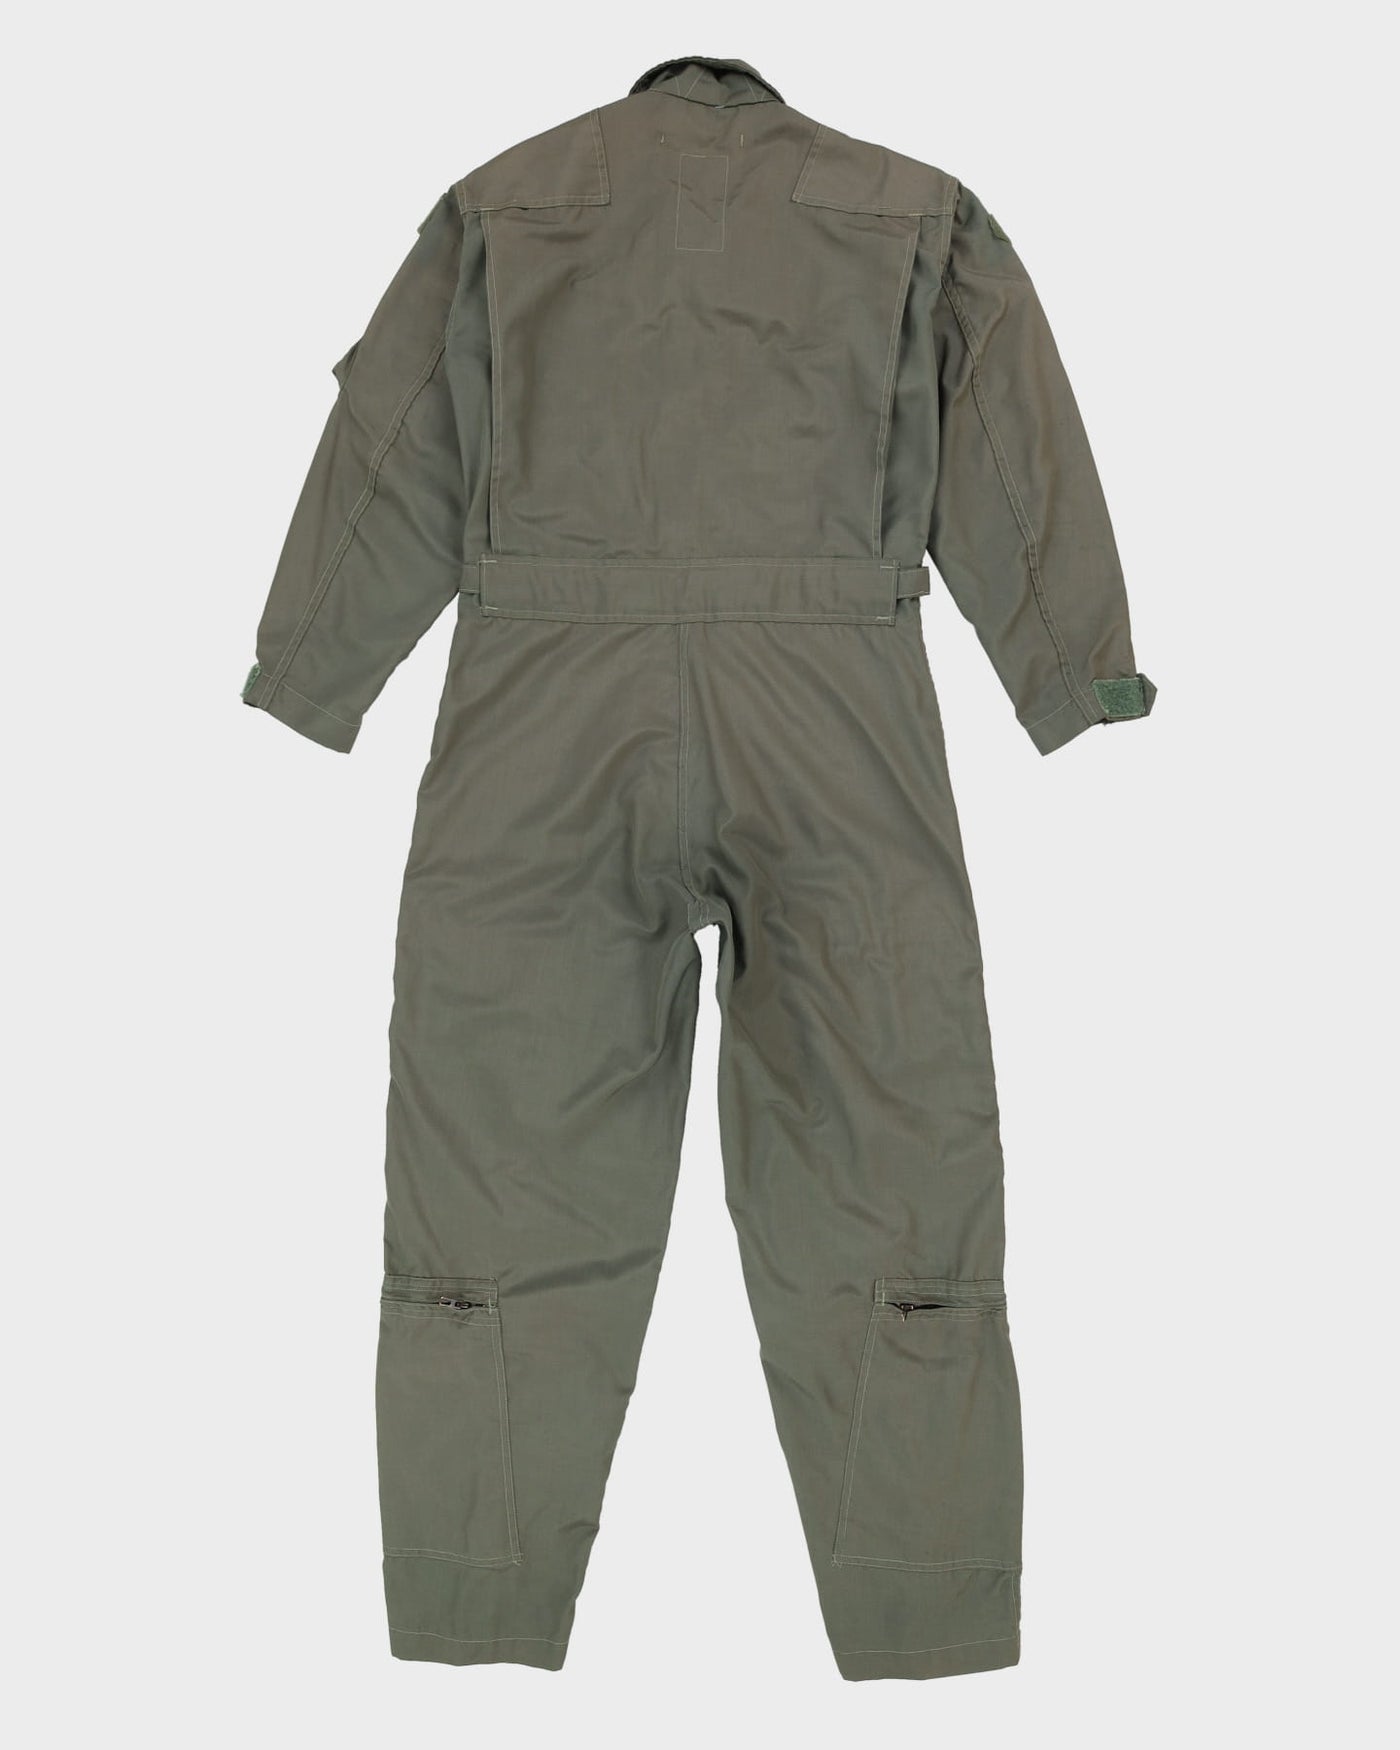 90s Vintage US Air Force CWU Flight Suit - Medium